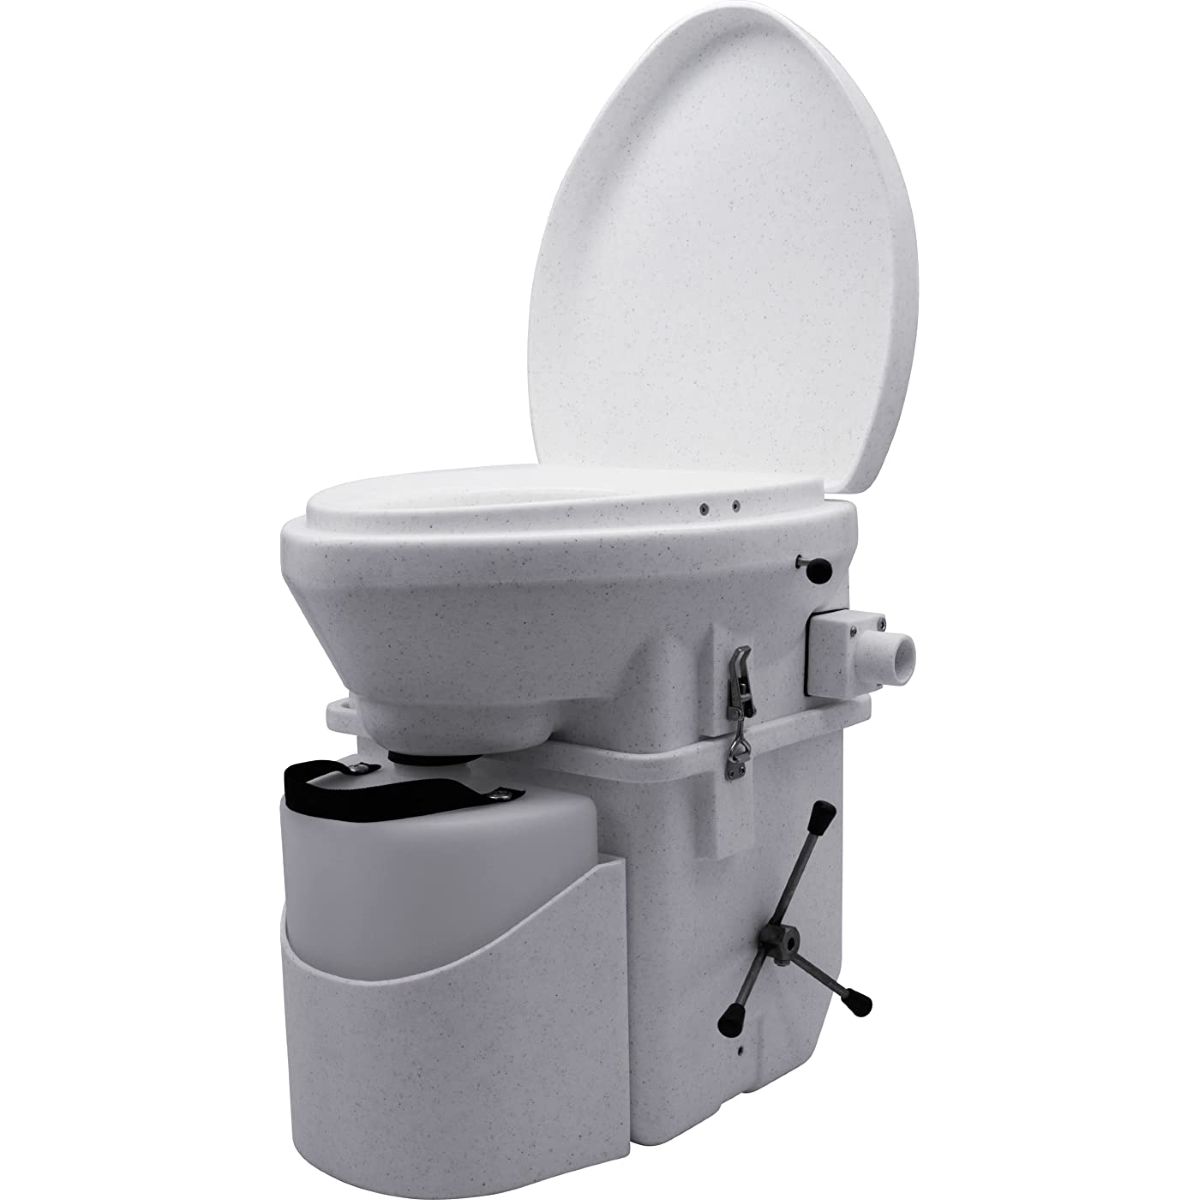 types of toilets - composting toilet